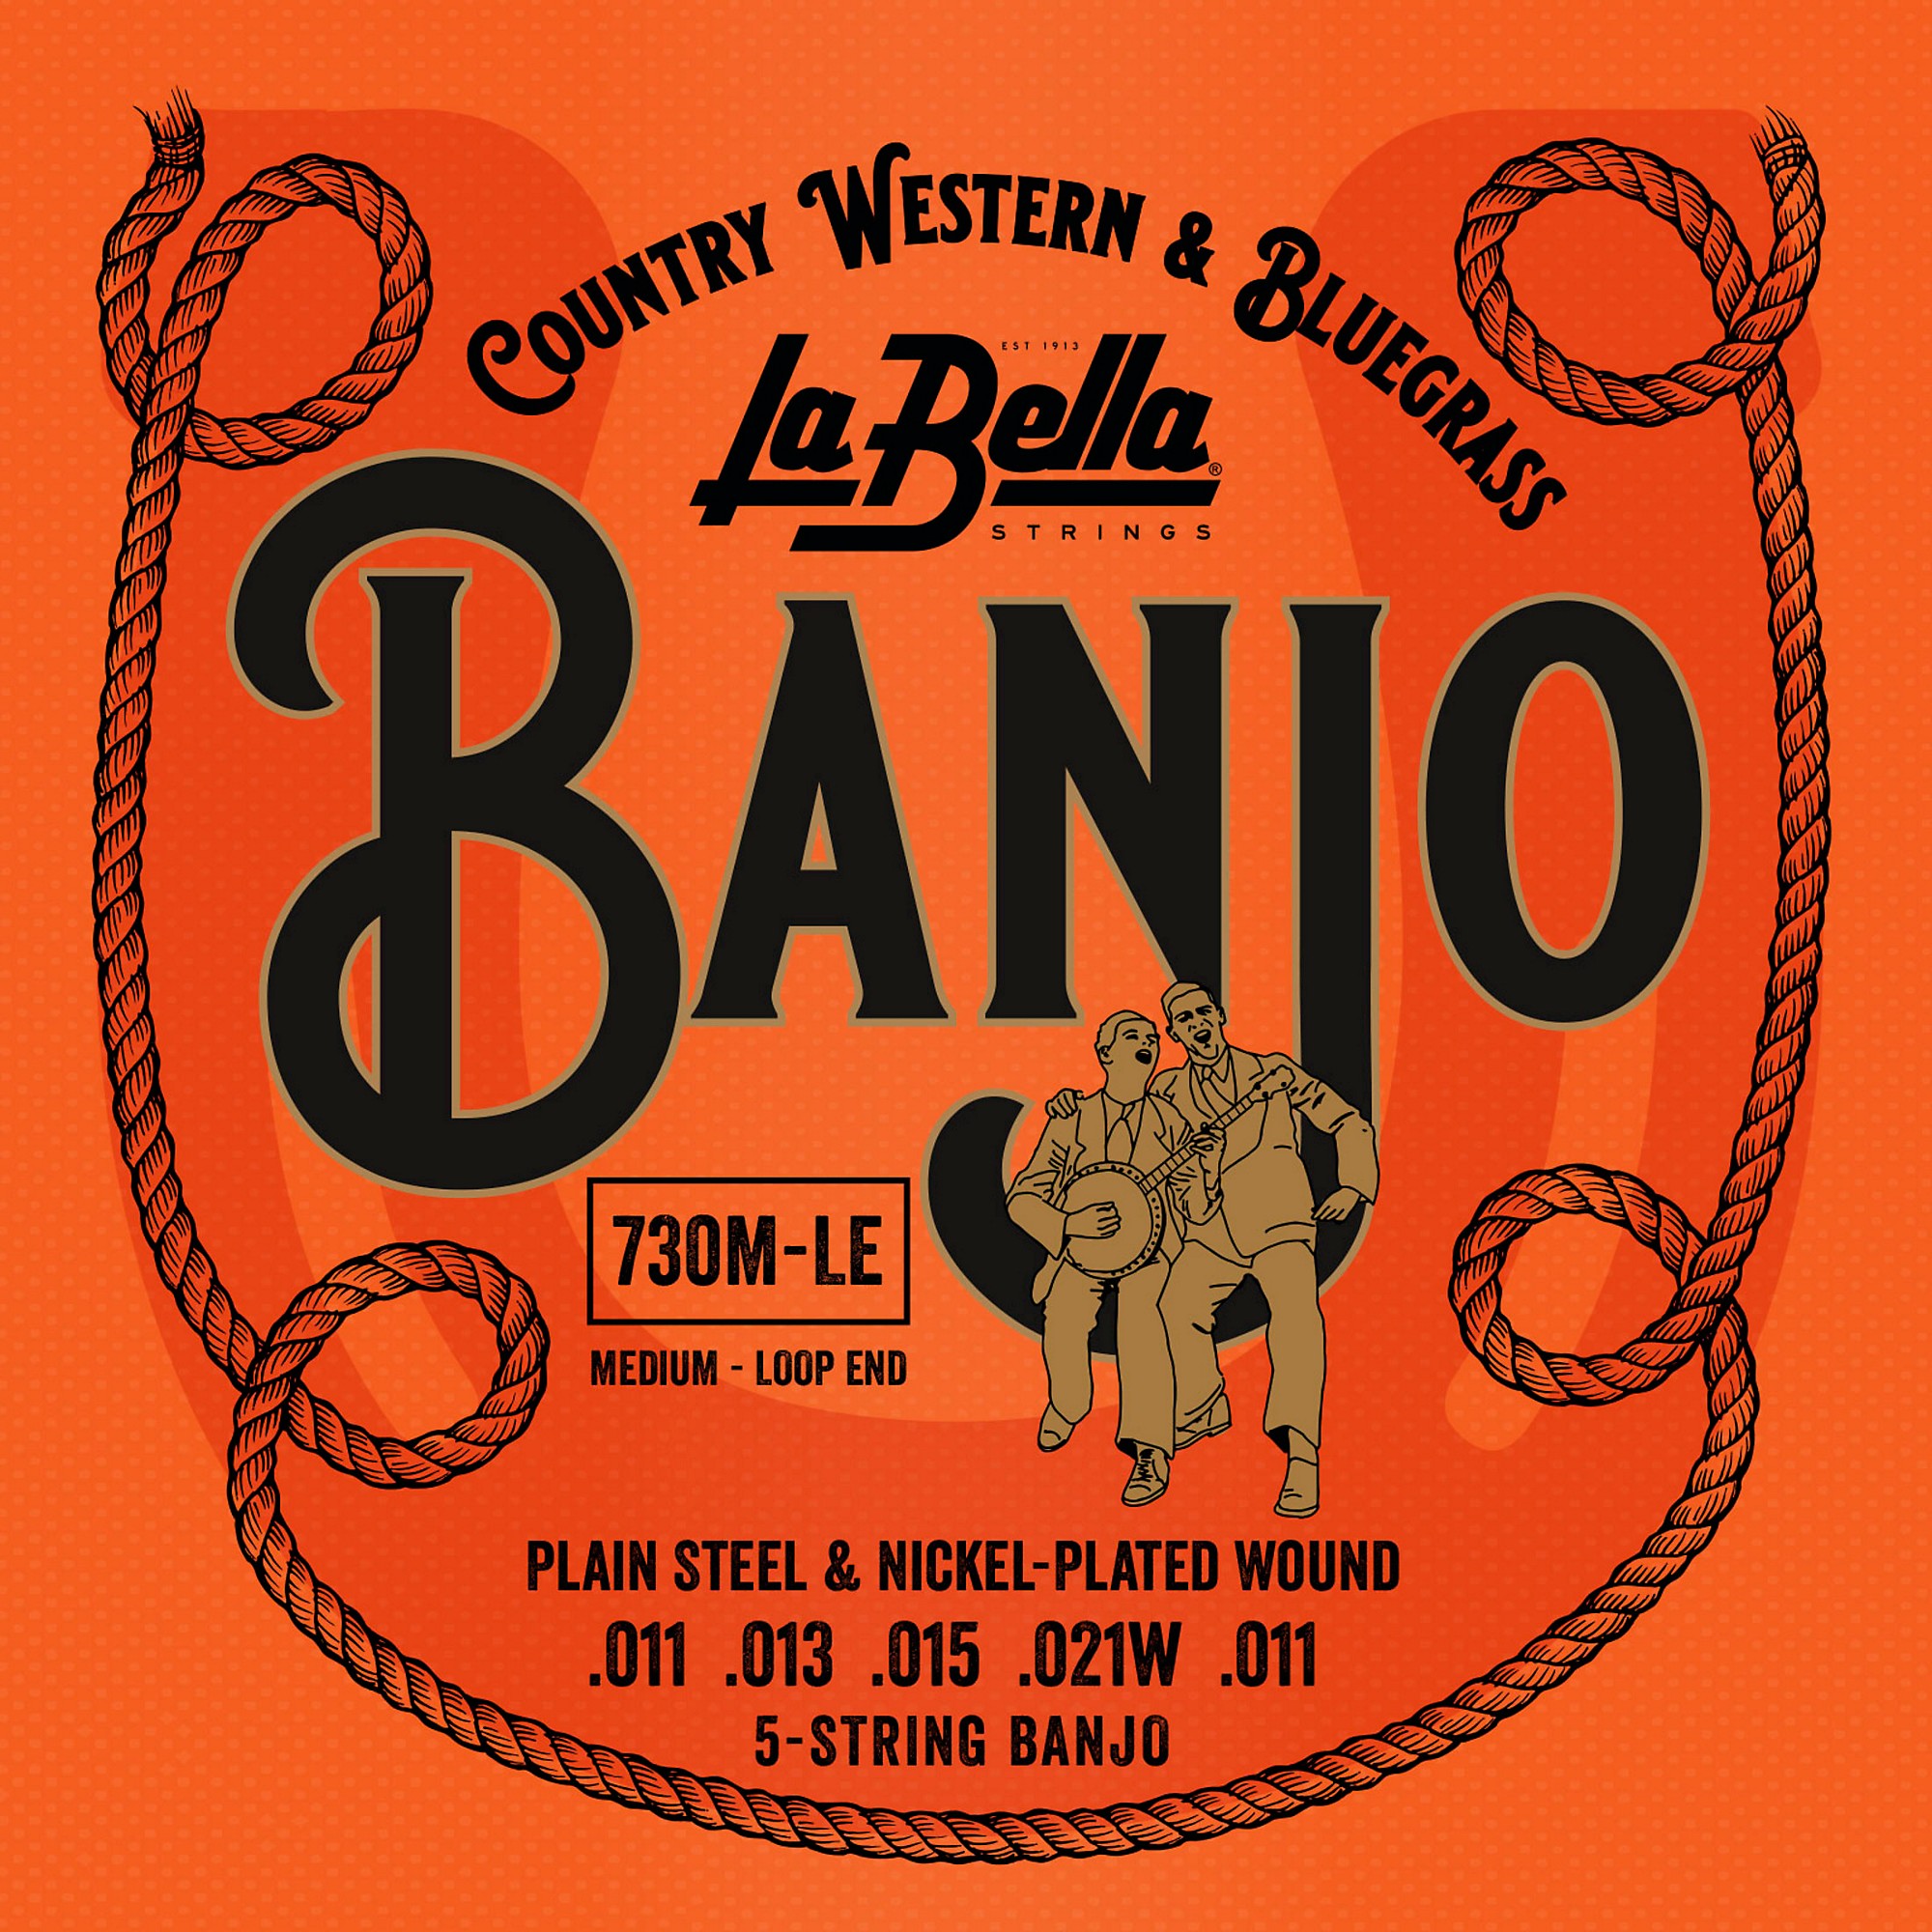 Green Banjo Guitar Logo | BrandCrowd Logo Maker | BrandCrowd